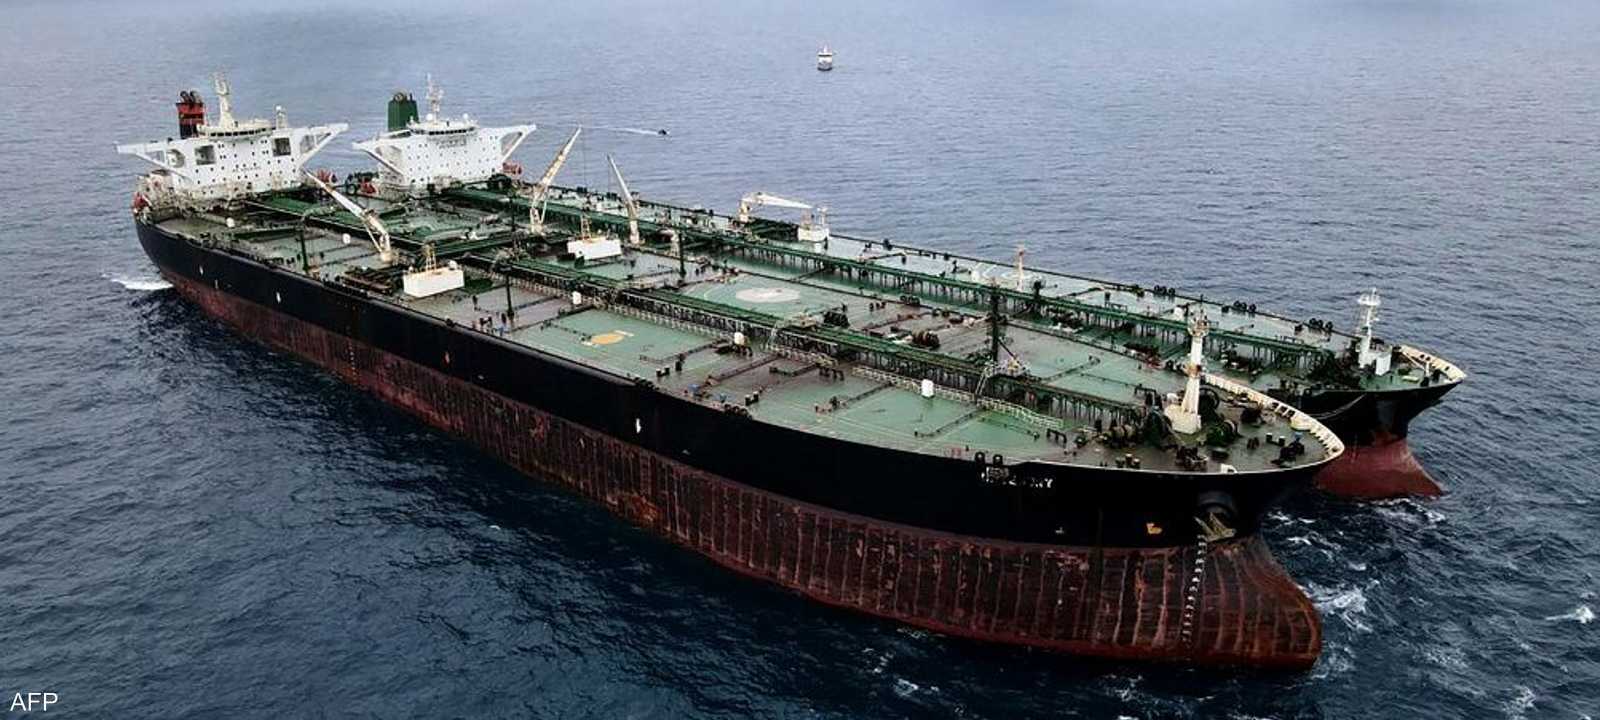 سفن نقل النفط